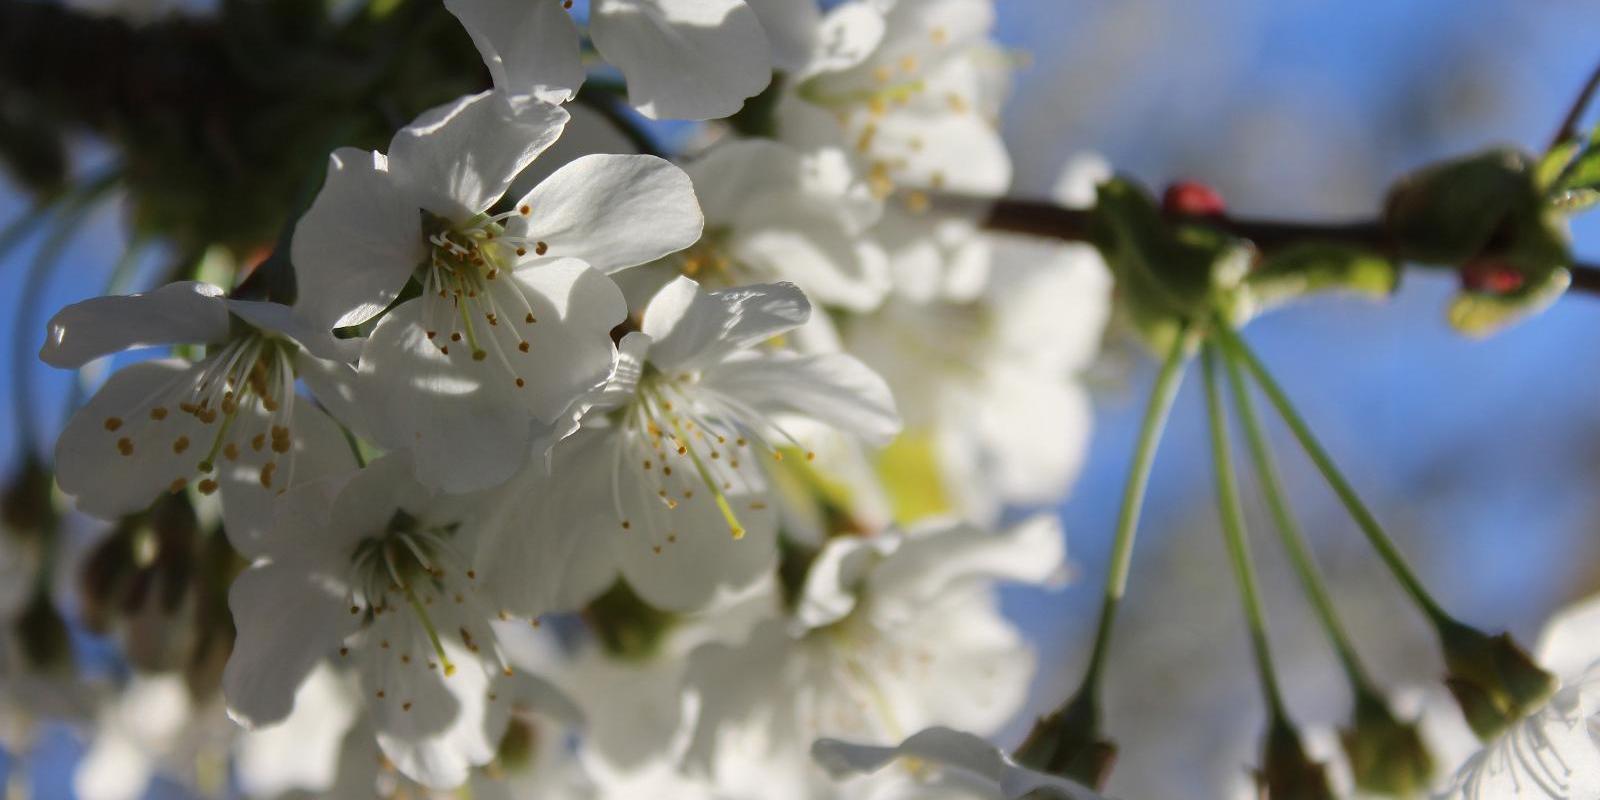 Järiste Winery, flowering orchard in spring